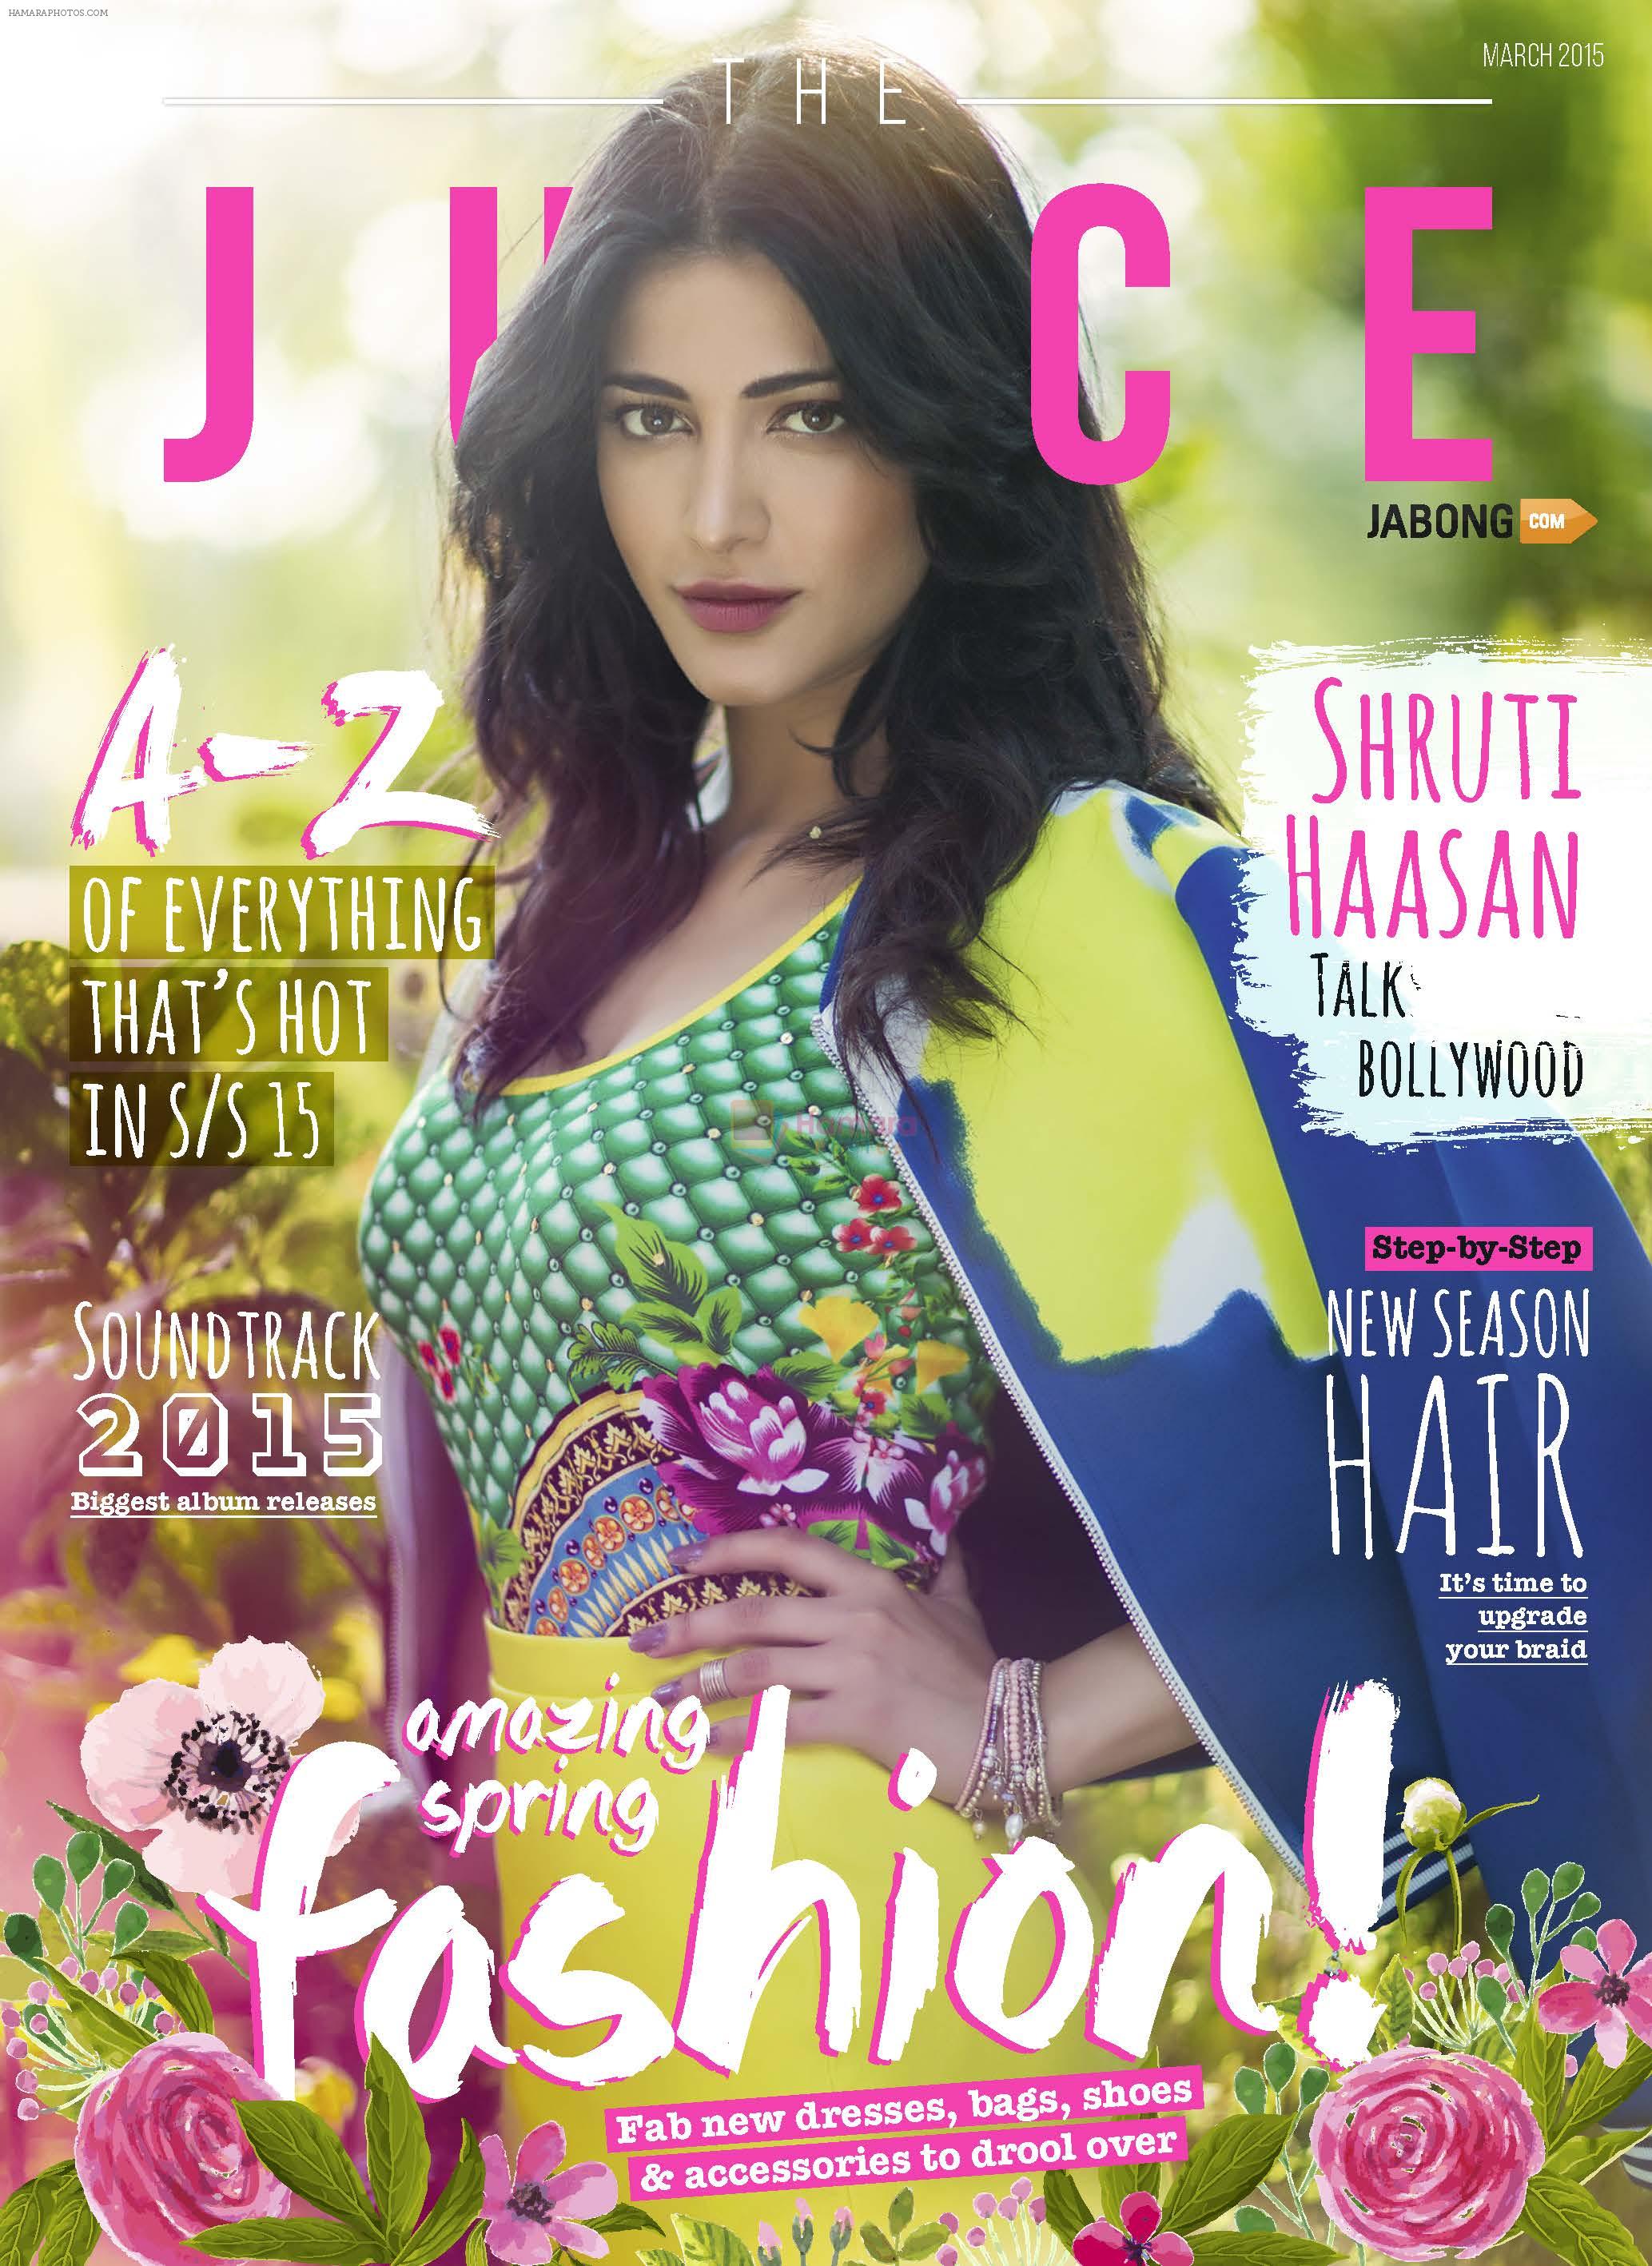 Shruti Hassan Rocks The Cover of JUICE Magazine